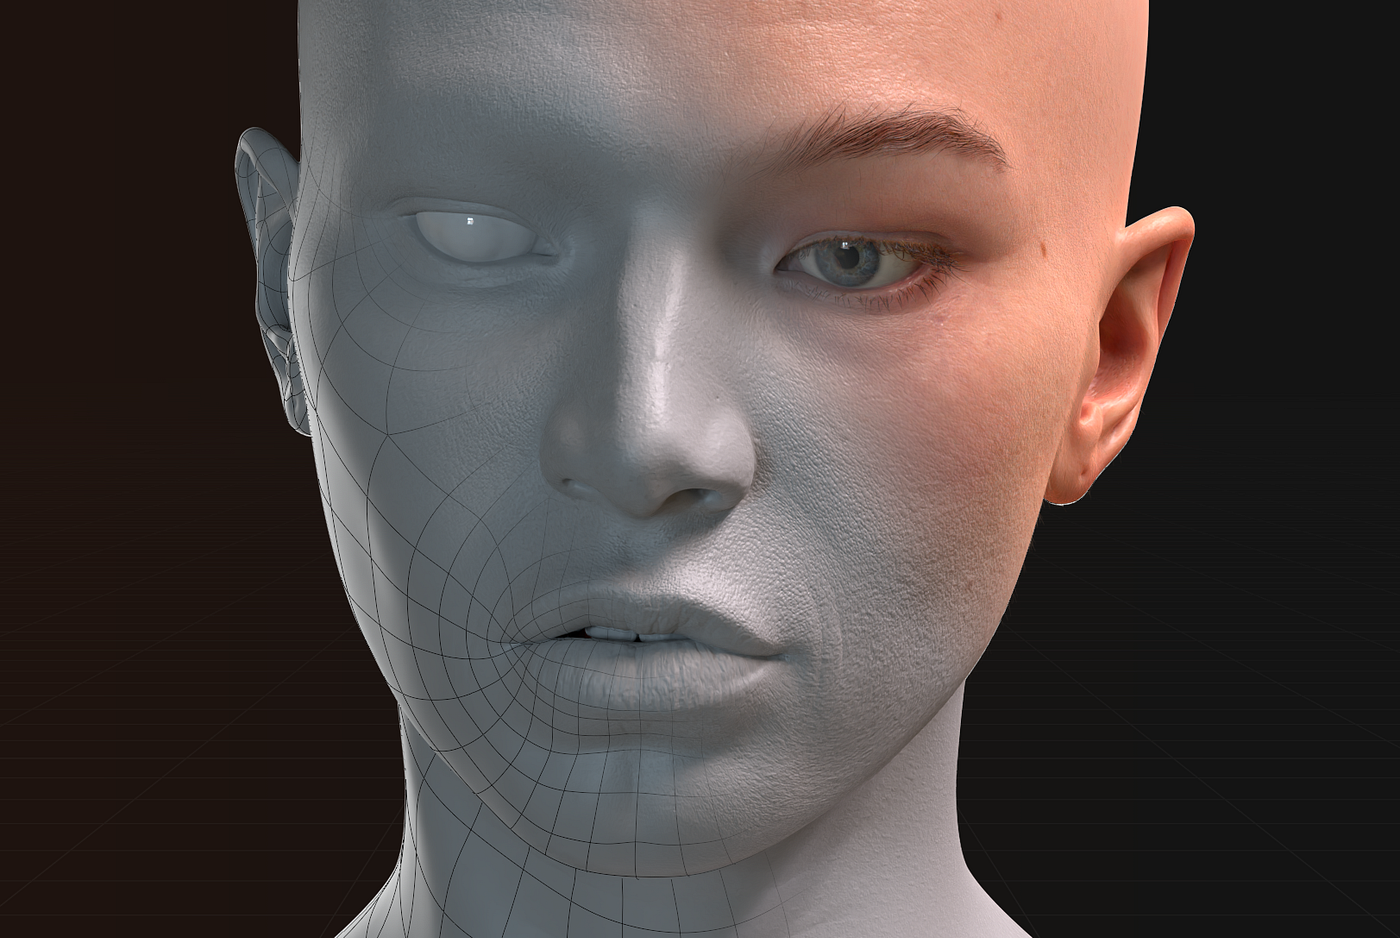 Realistic Facial Features in 3D Character Sculpts